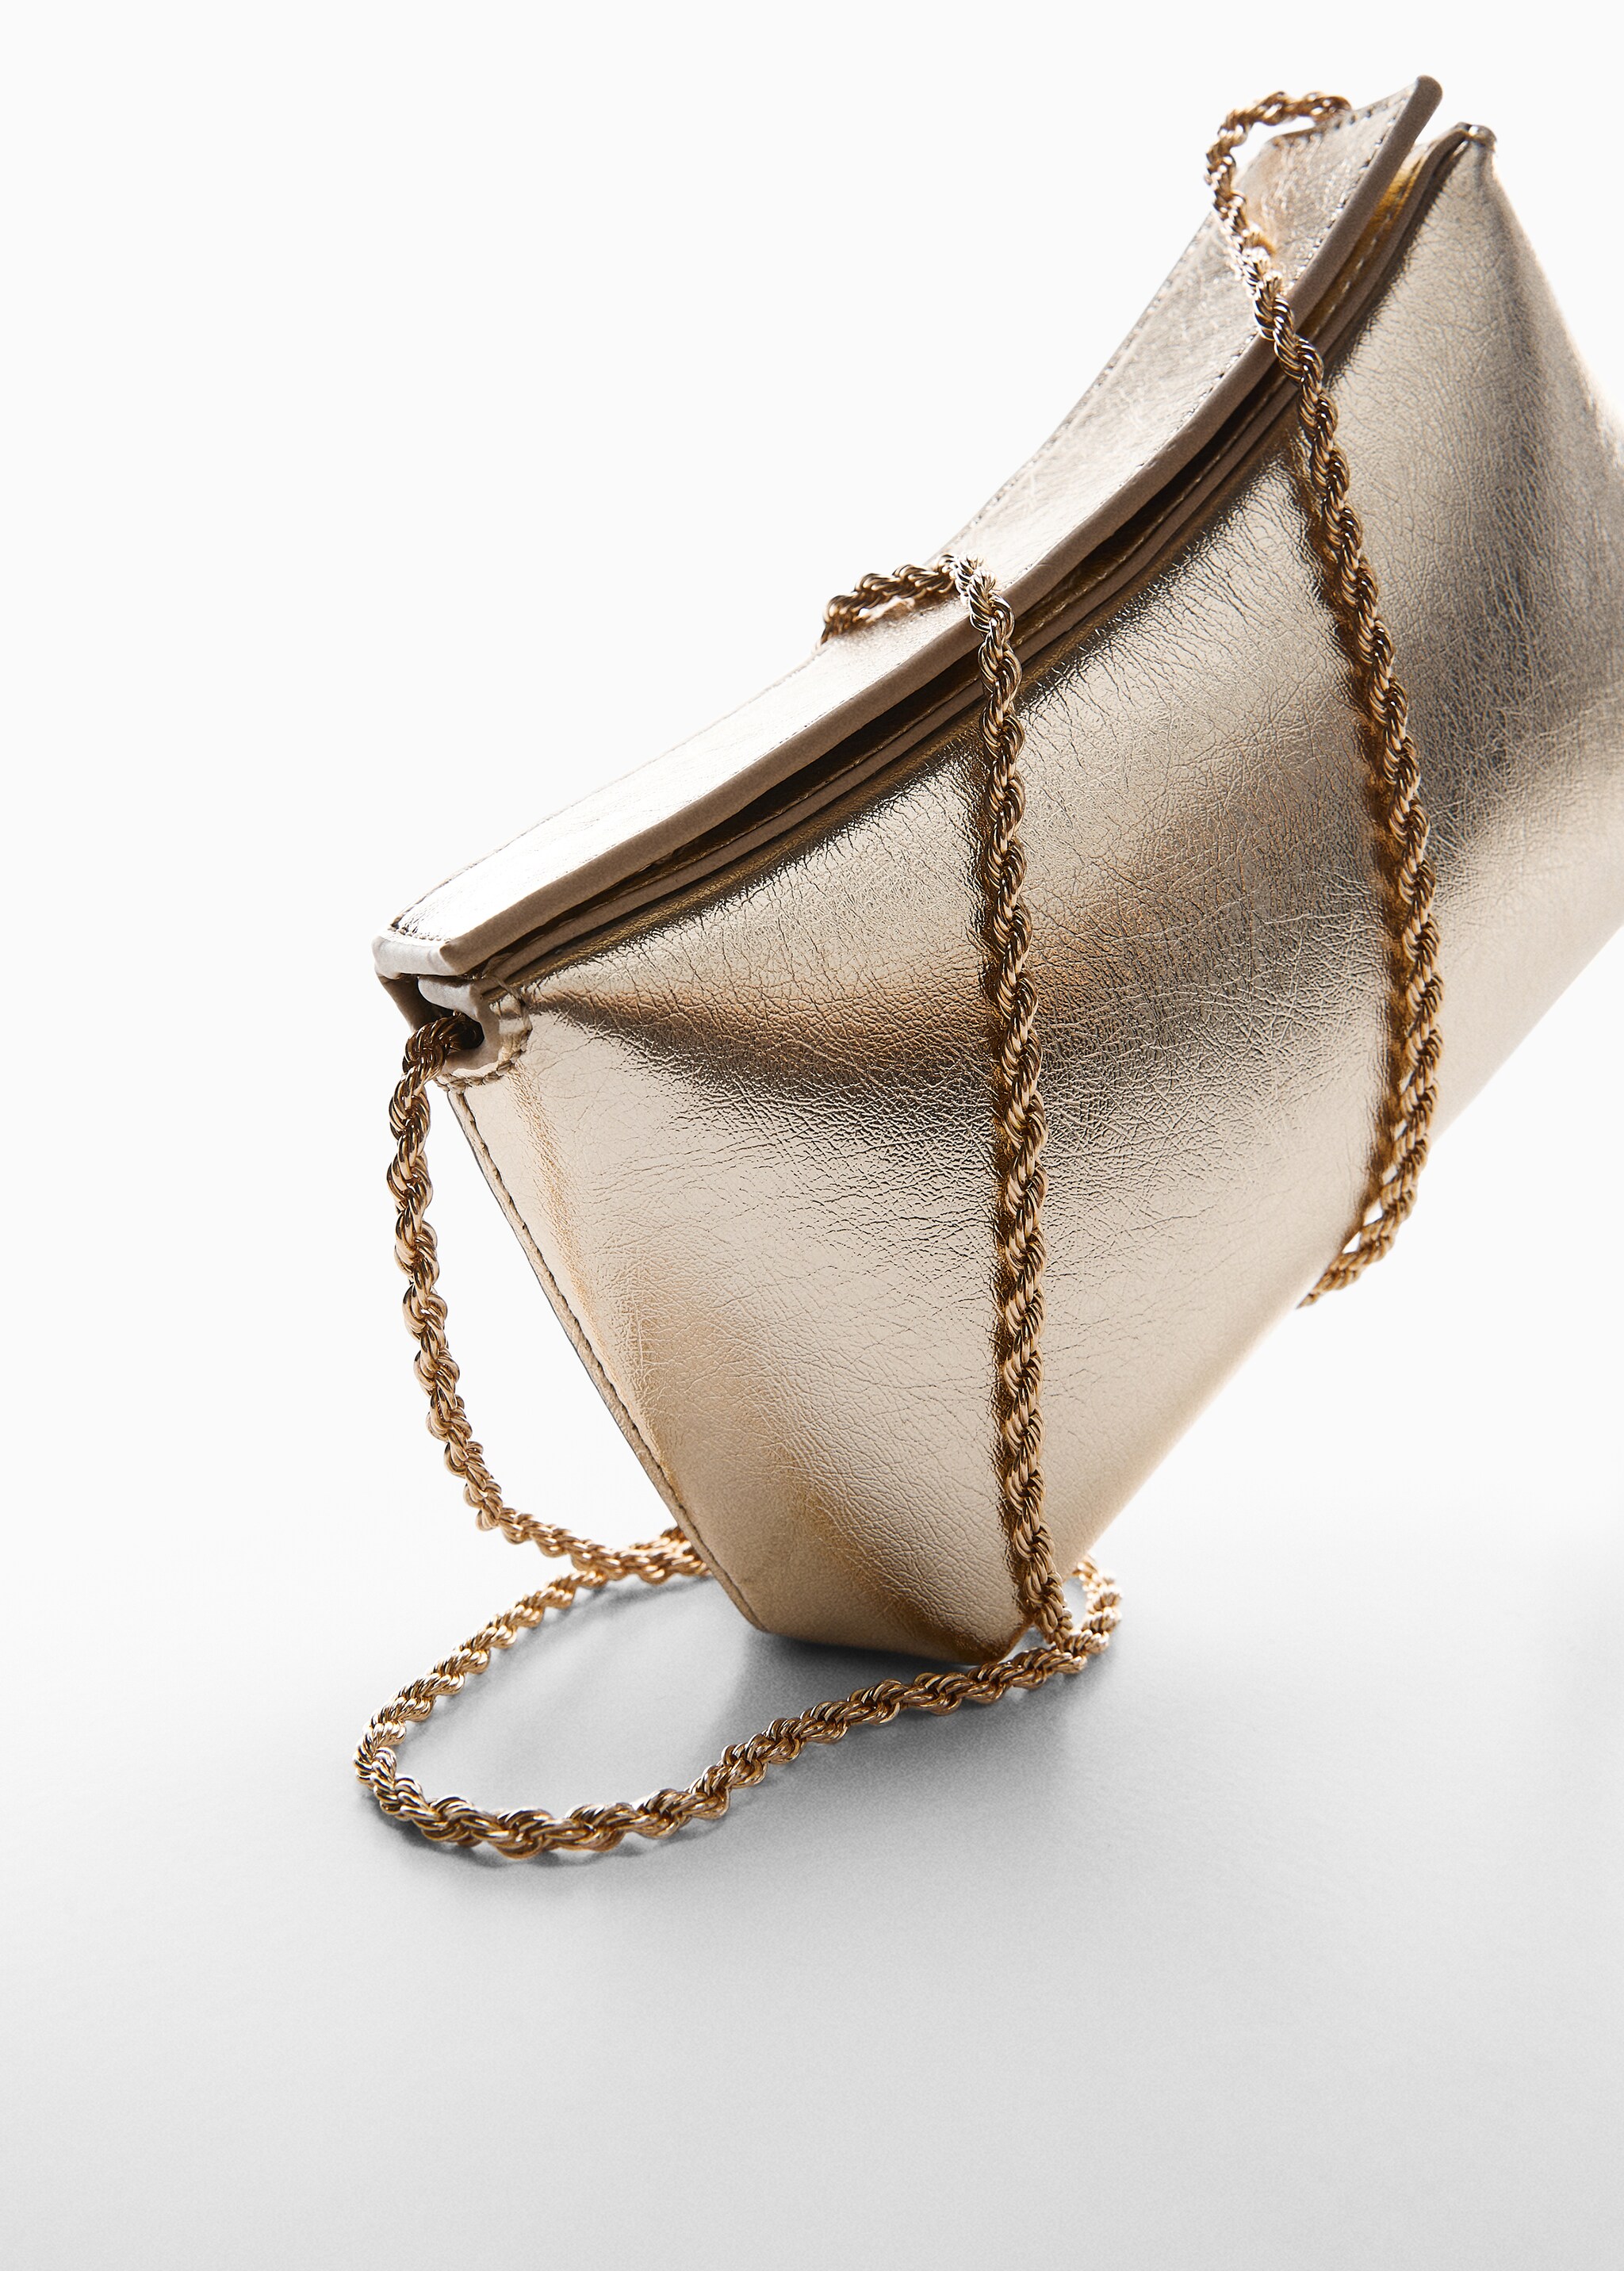 Chain shoulder bag - Details of the article 5